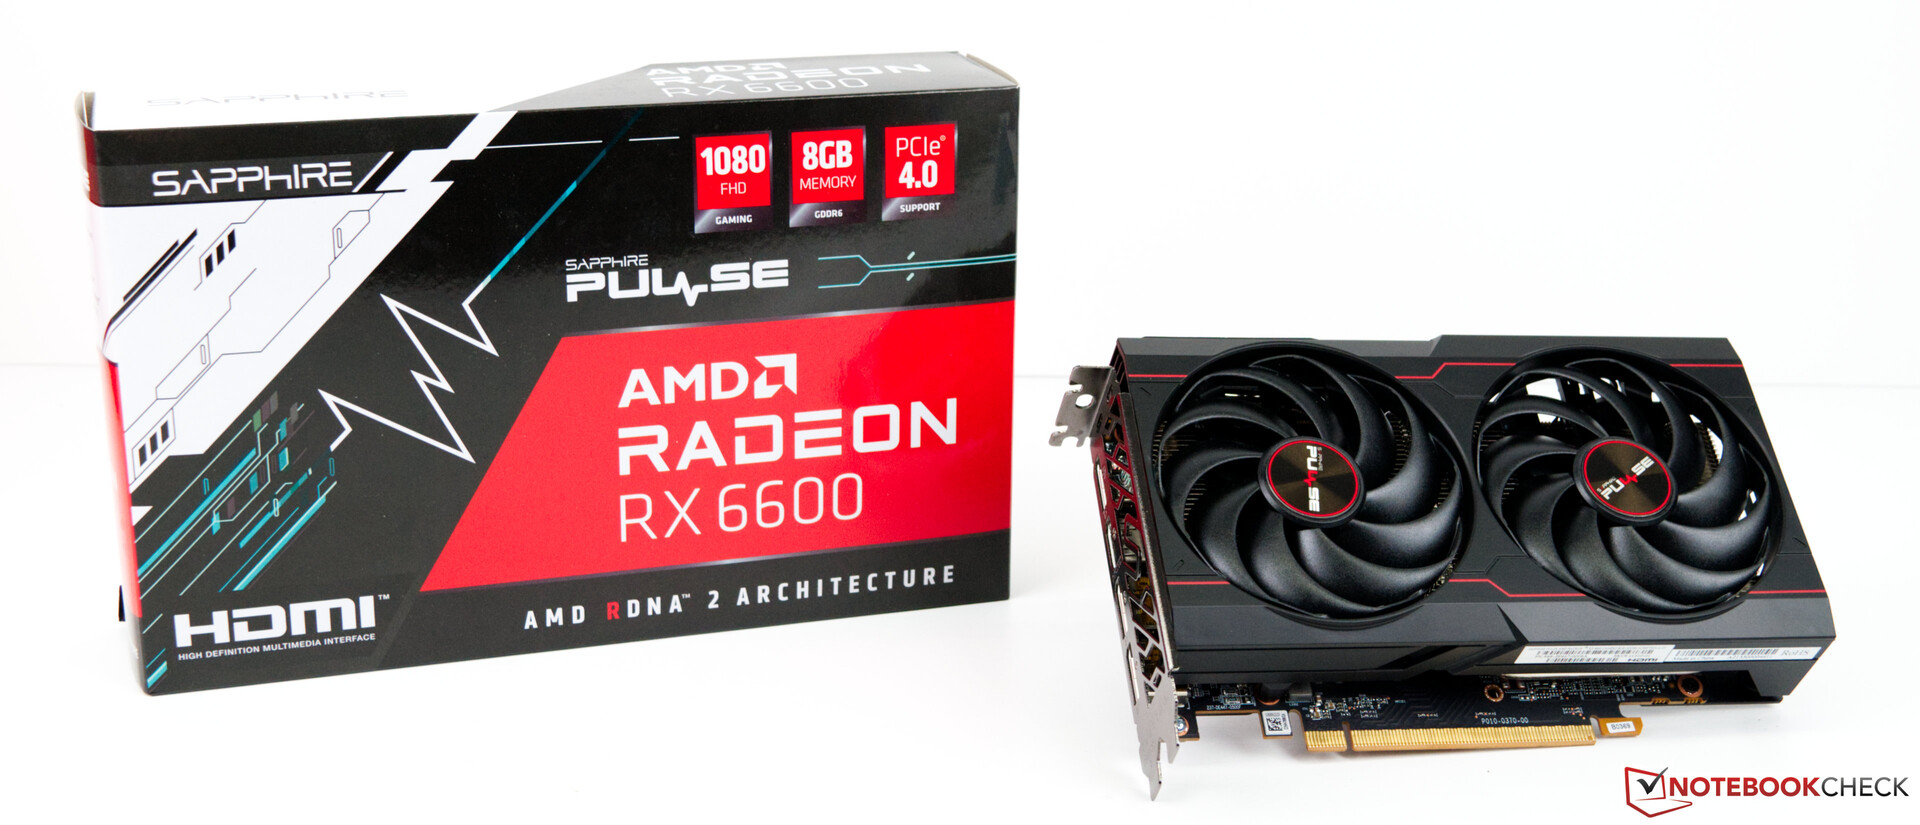 Review of the AMD Radeon RX 6600 Mid-Range Desktop GPU -   Reviews